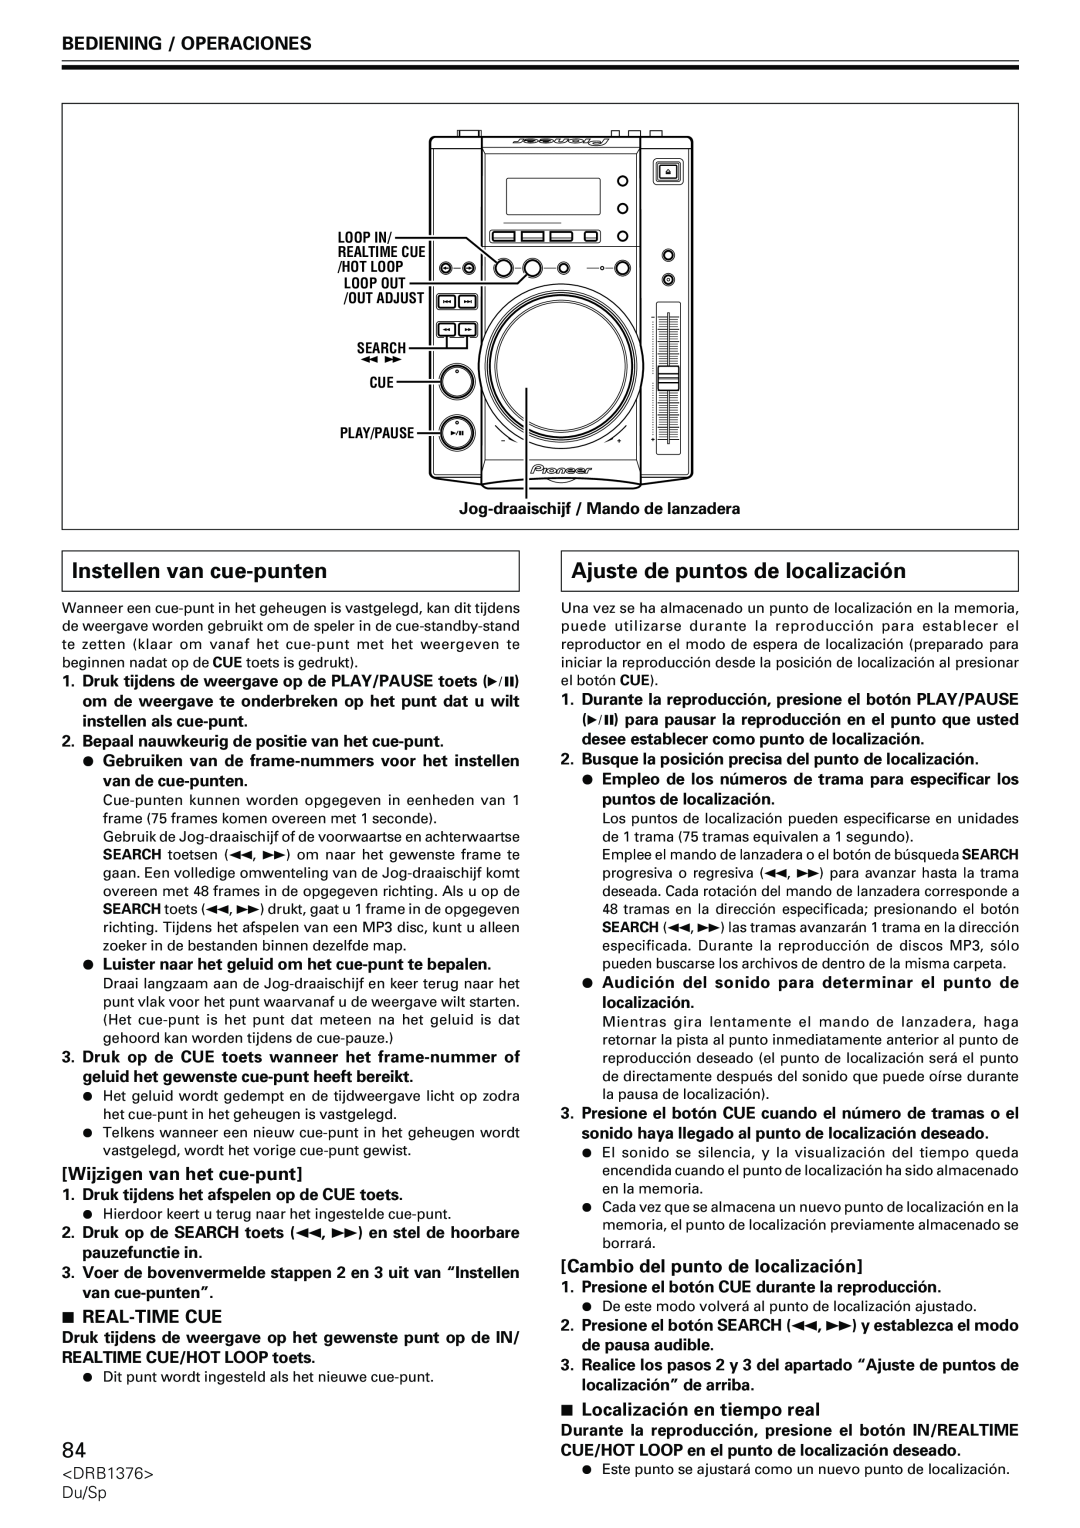 Pioneer CDJ-200 manual Instellen van cue-punten, Ajuste de puntos de localización, Wijzigen van het cue-punt, 7REAL-TIMECUE 